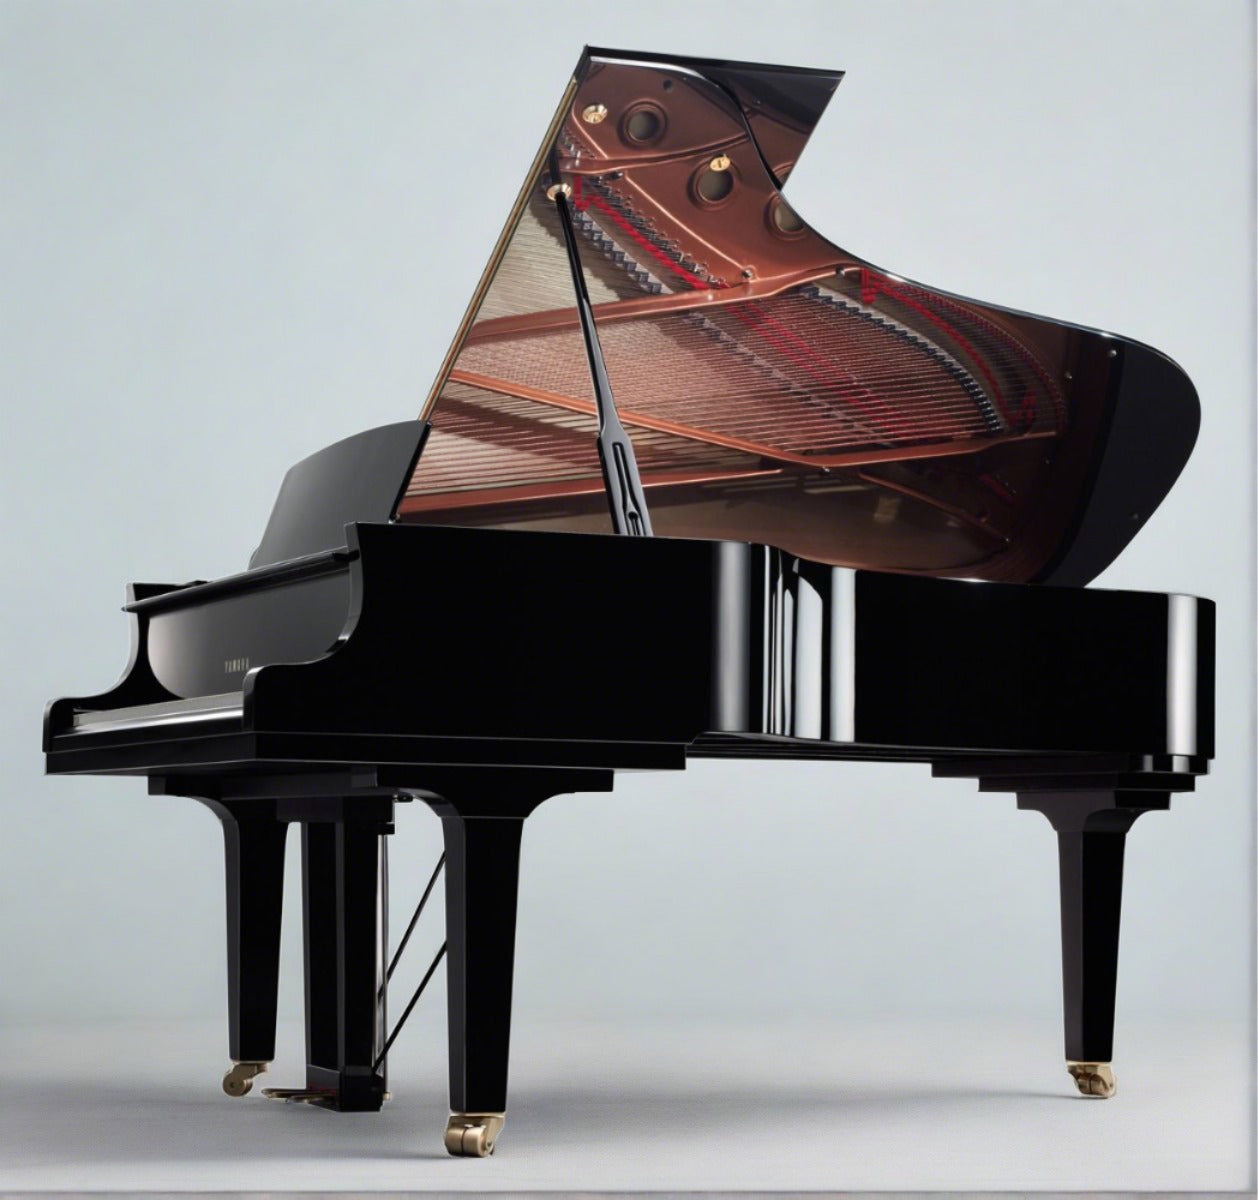 Yamaha C7X 7'6" Grand Piano In Polished Ebony